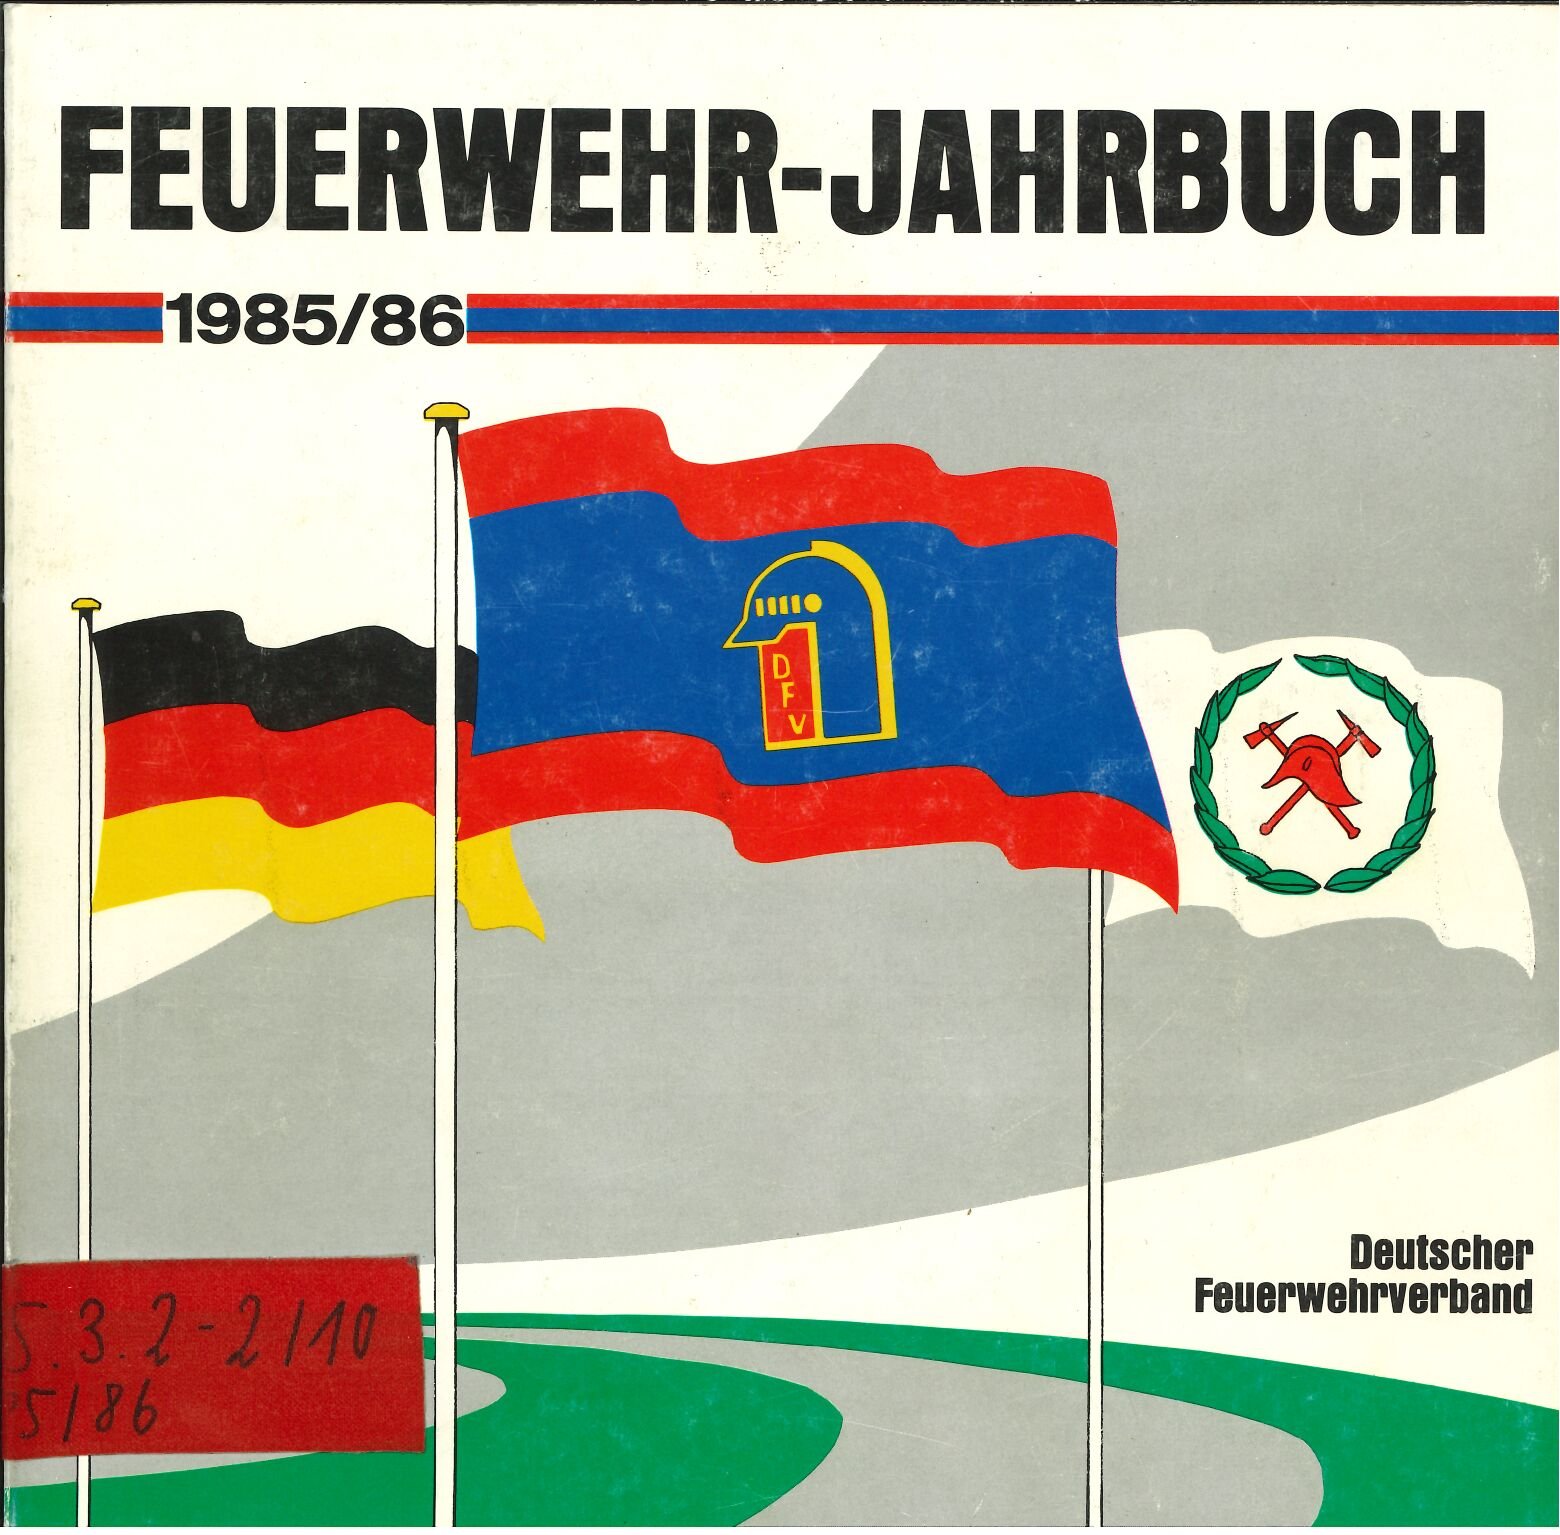 Feuerwehr-Jahrbuch 1985/86 (Feuerwehrmuseum Grethen CC BY-NC-SA)